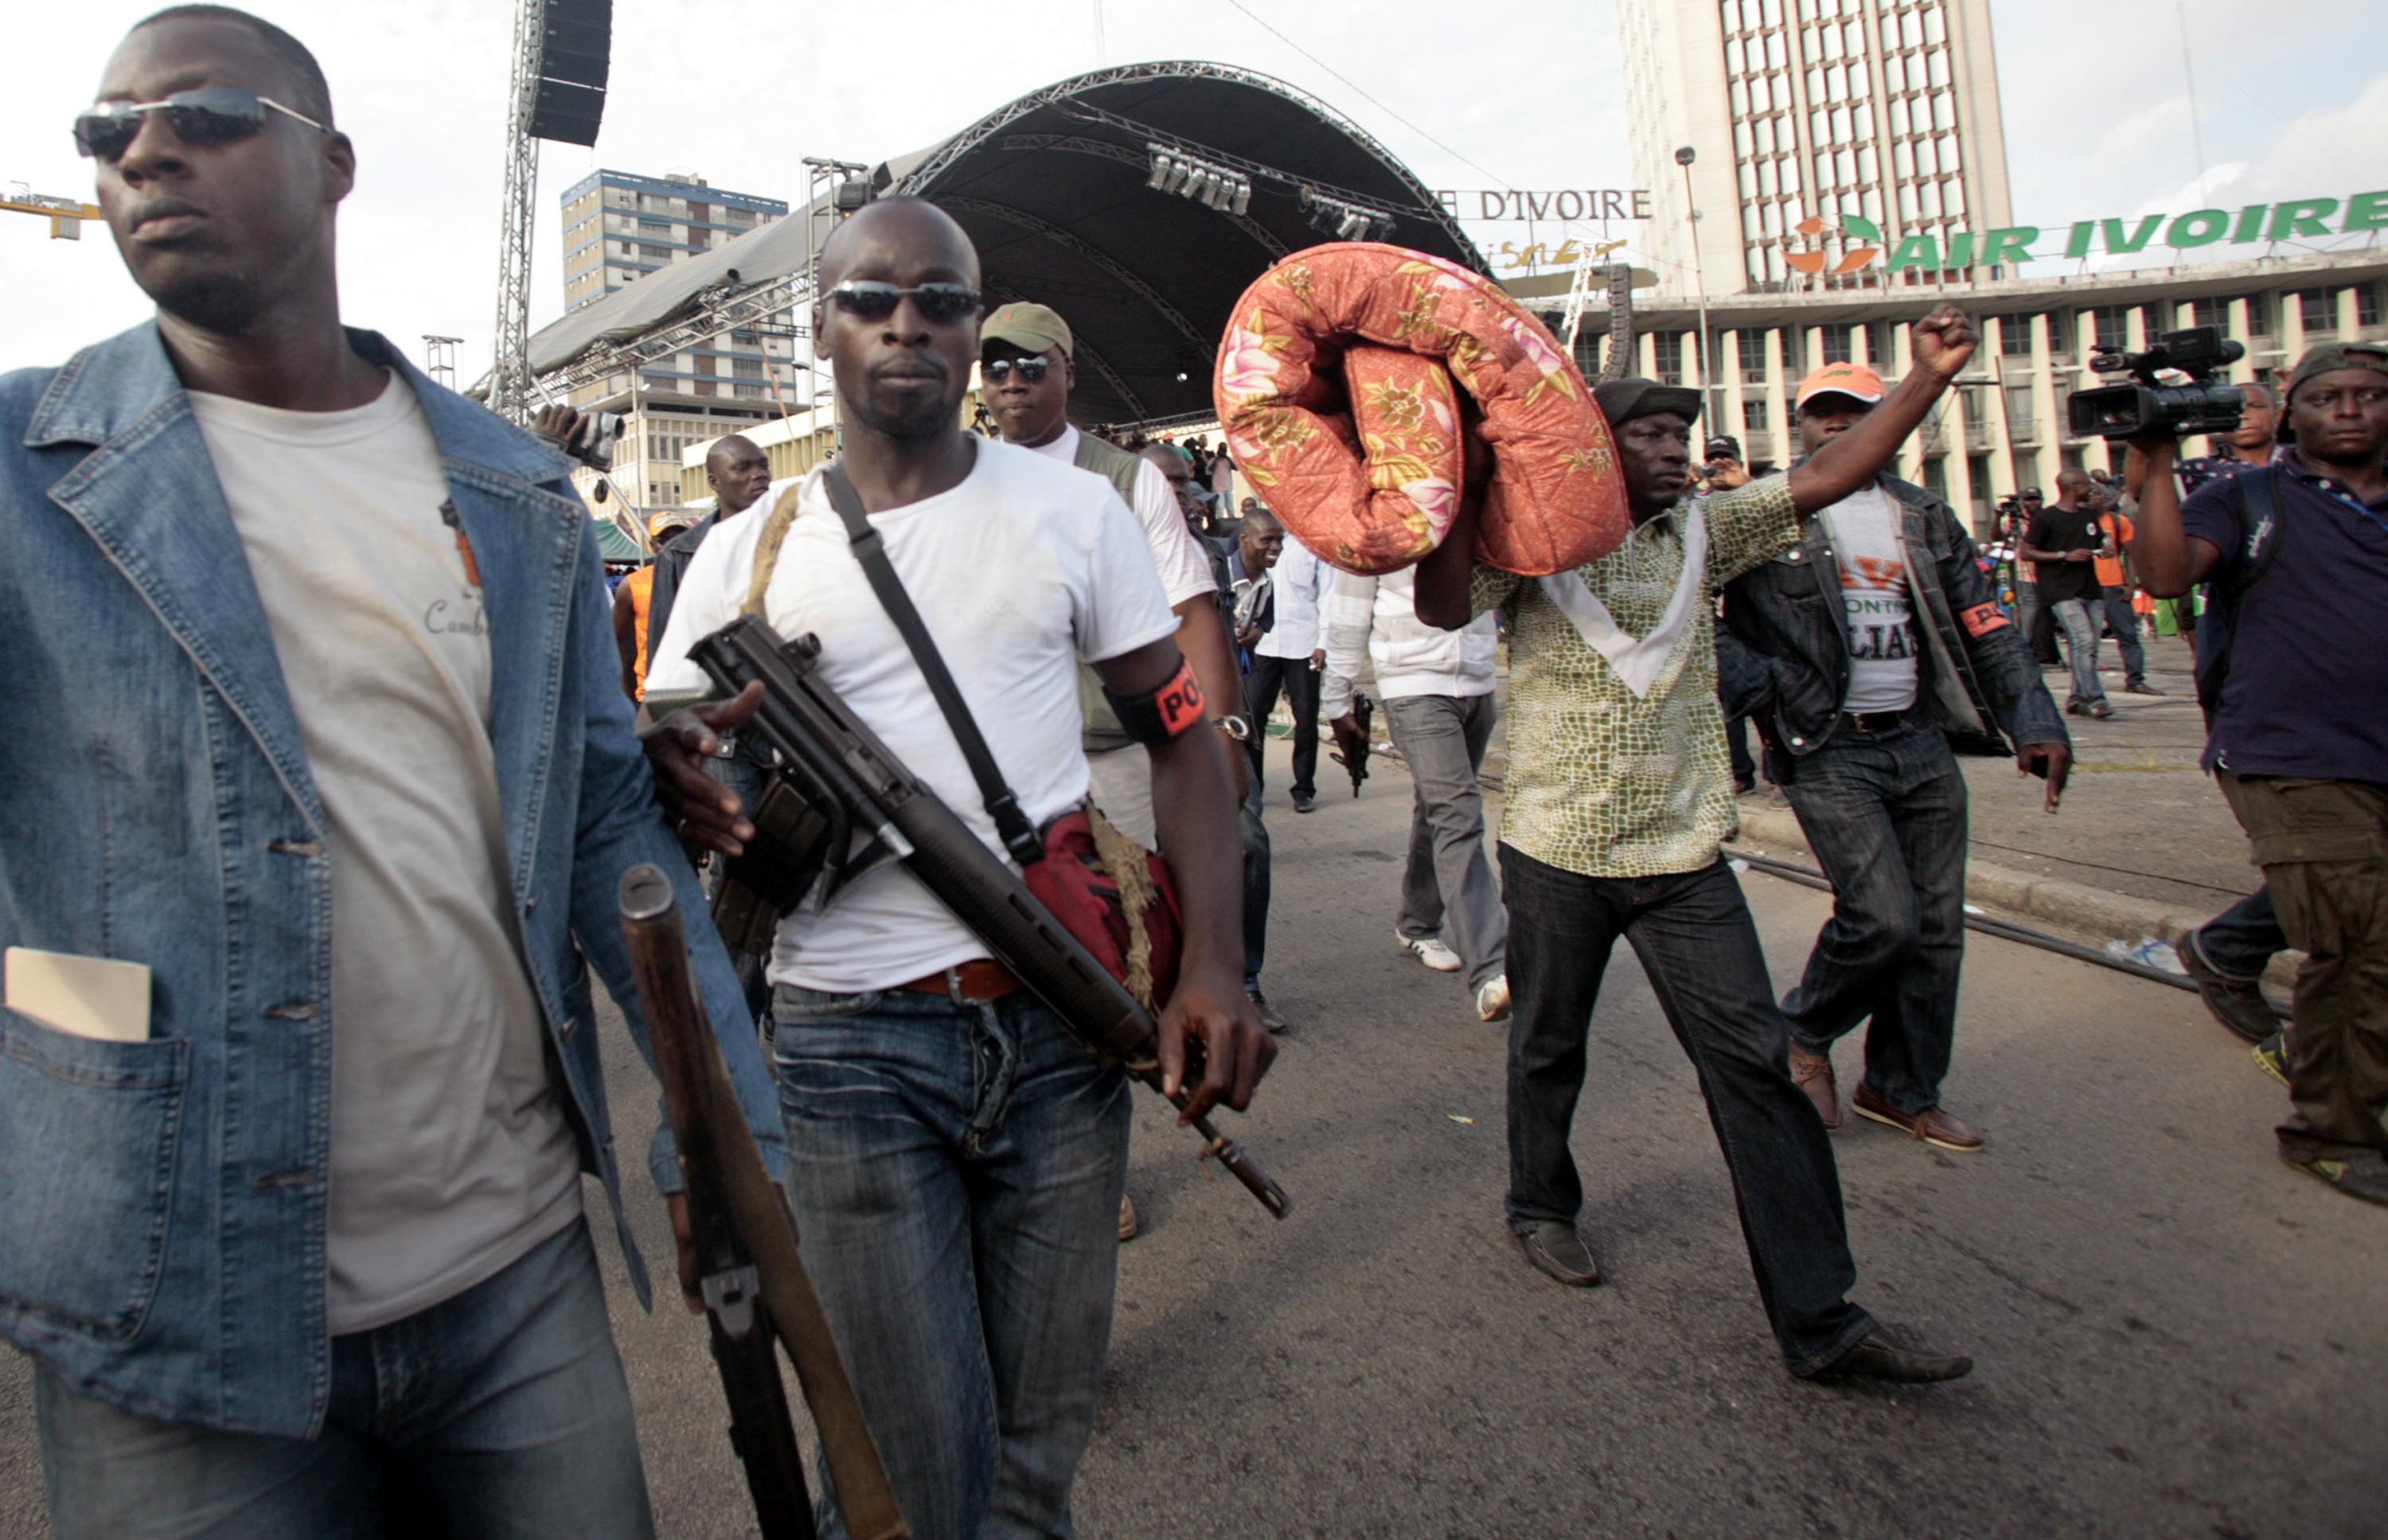 våld, Elfenbenskusten, Gbagbo, Ouattara, Brott och straff, President, Krig, FN